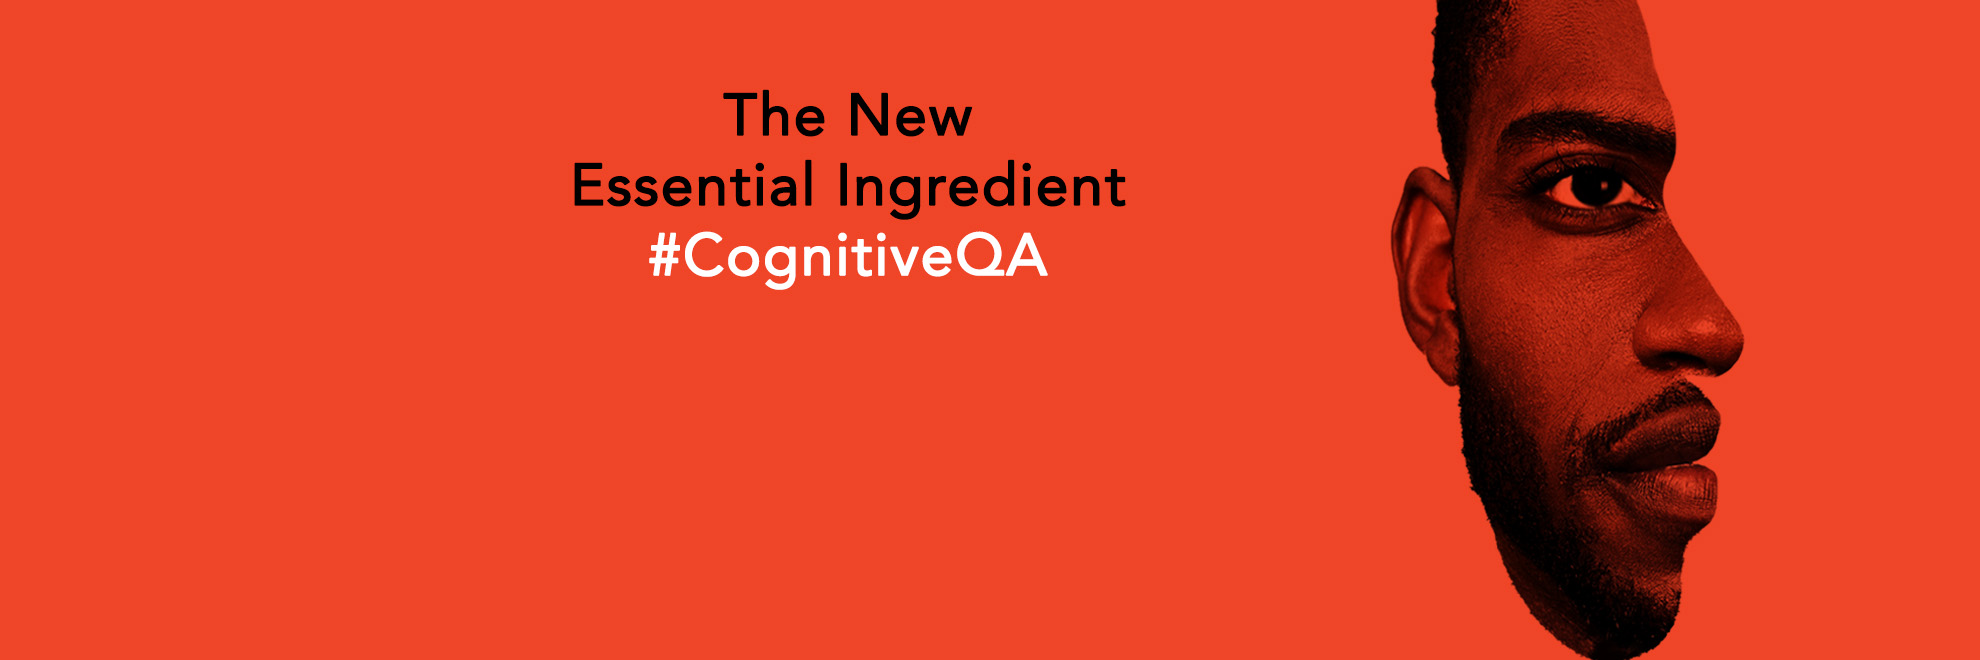 Webcast: Cognitive QA